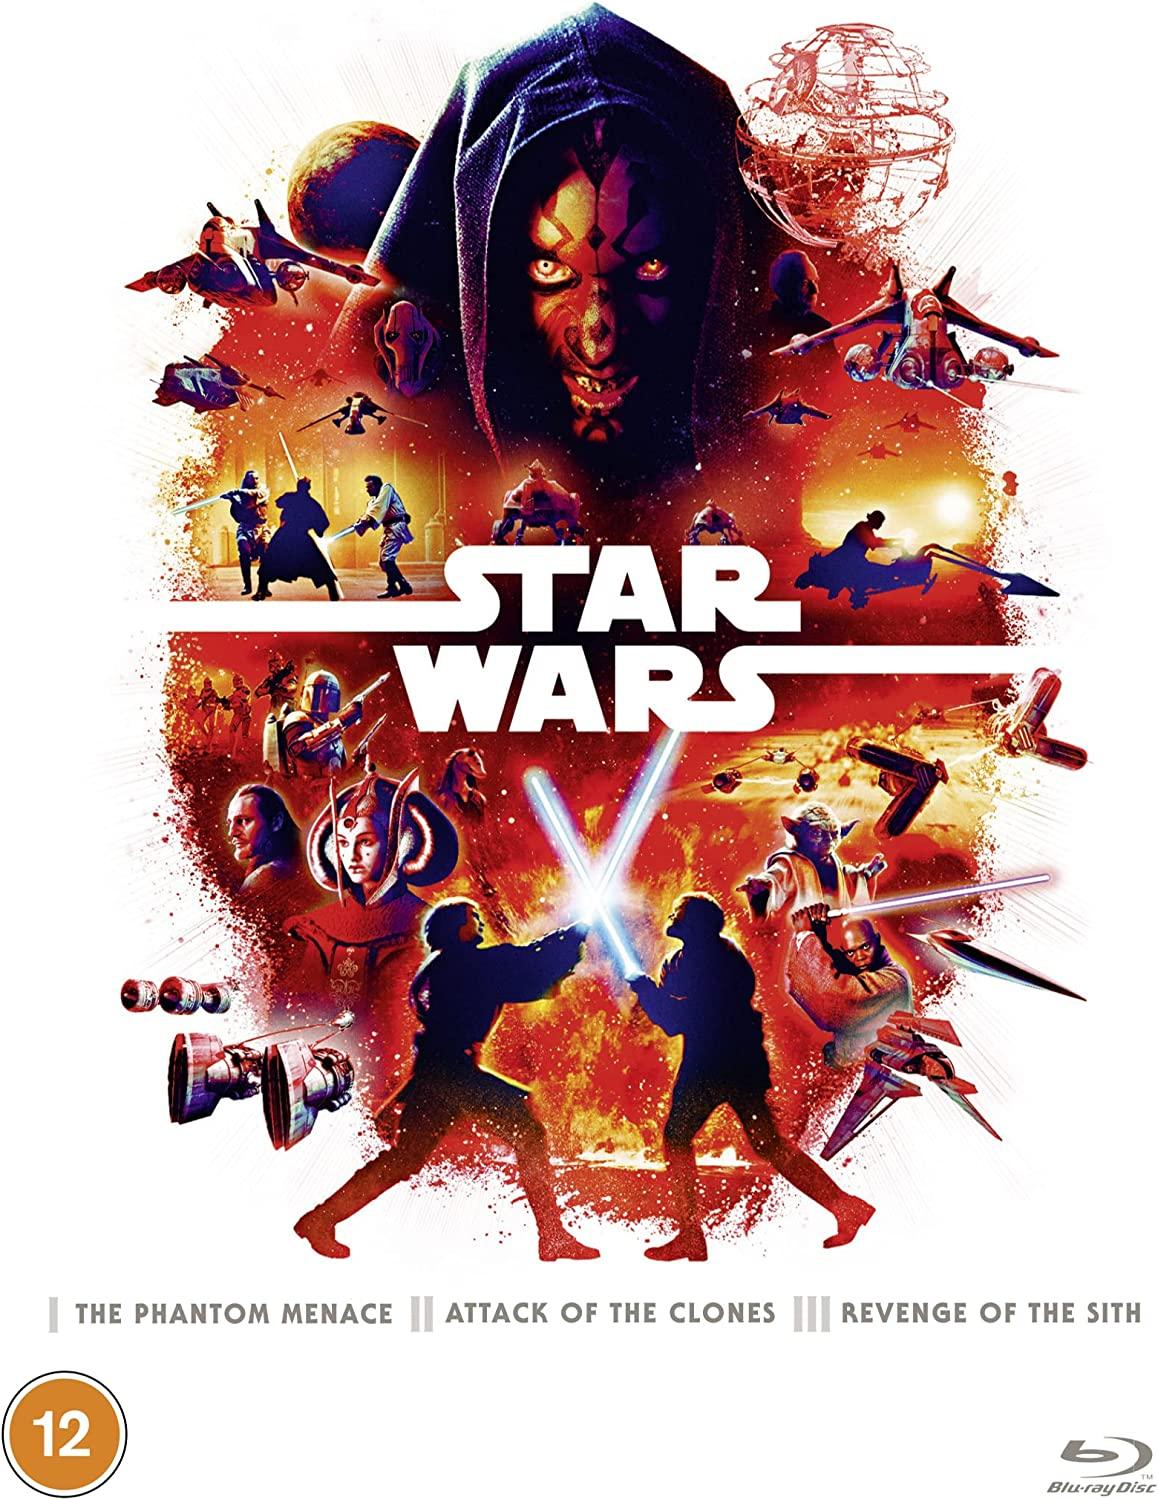 Star Wars Trilogy: Episodes I, II and III (2022) Blu-ray